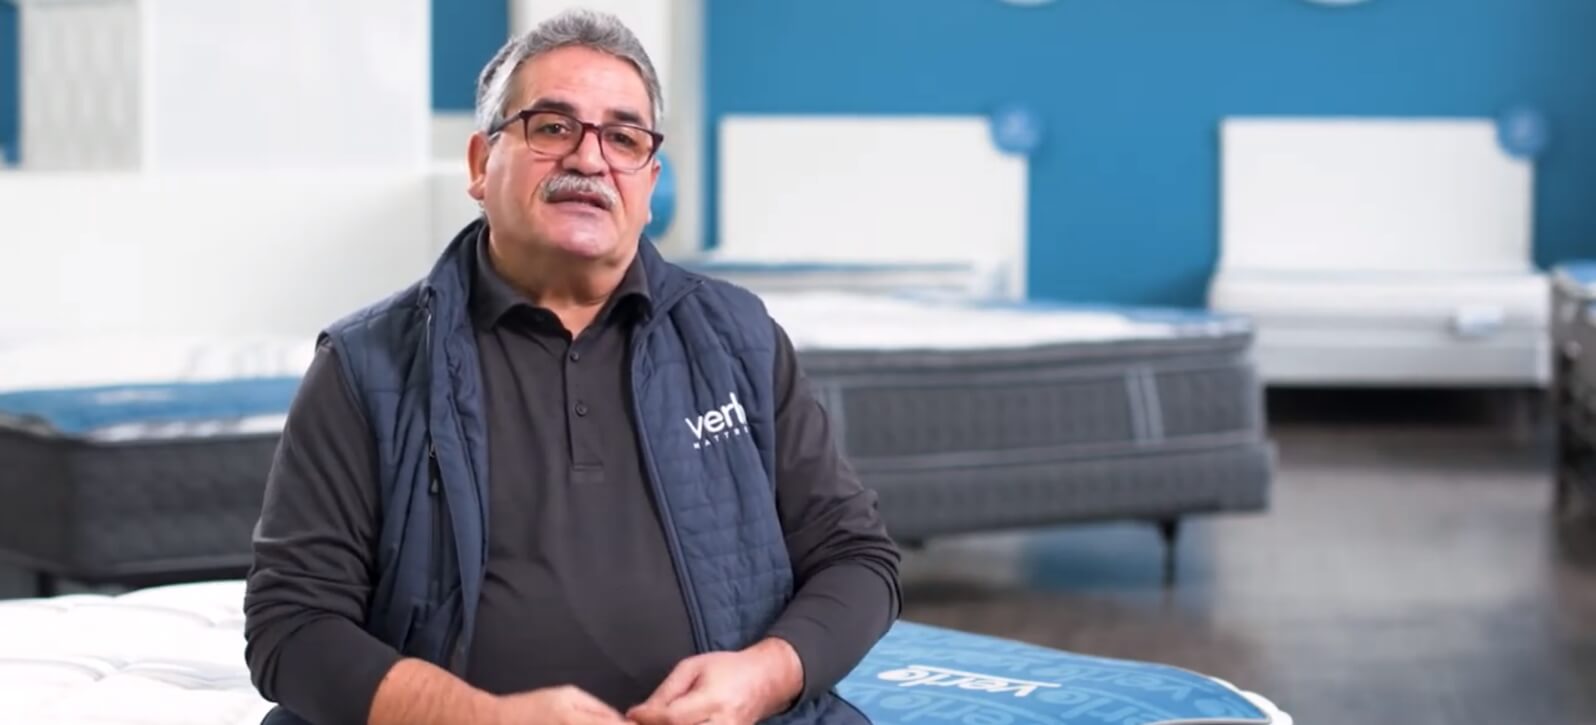 Verlo mattress warehouse franchise